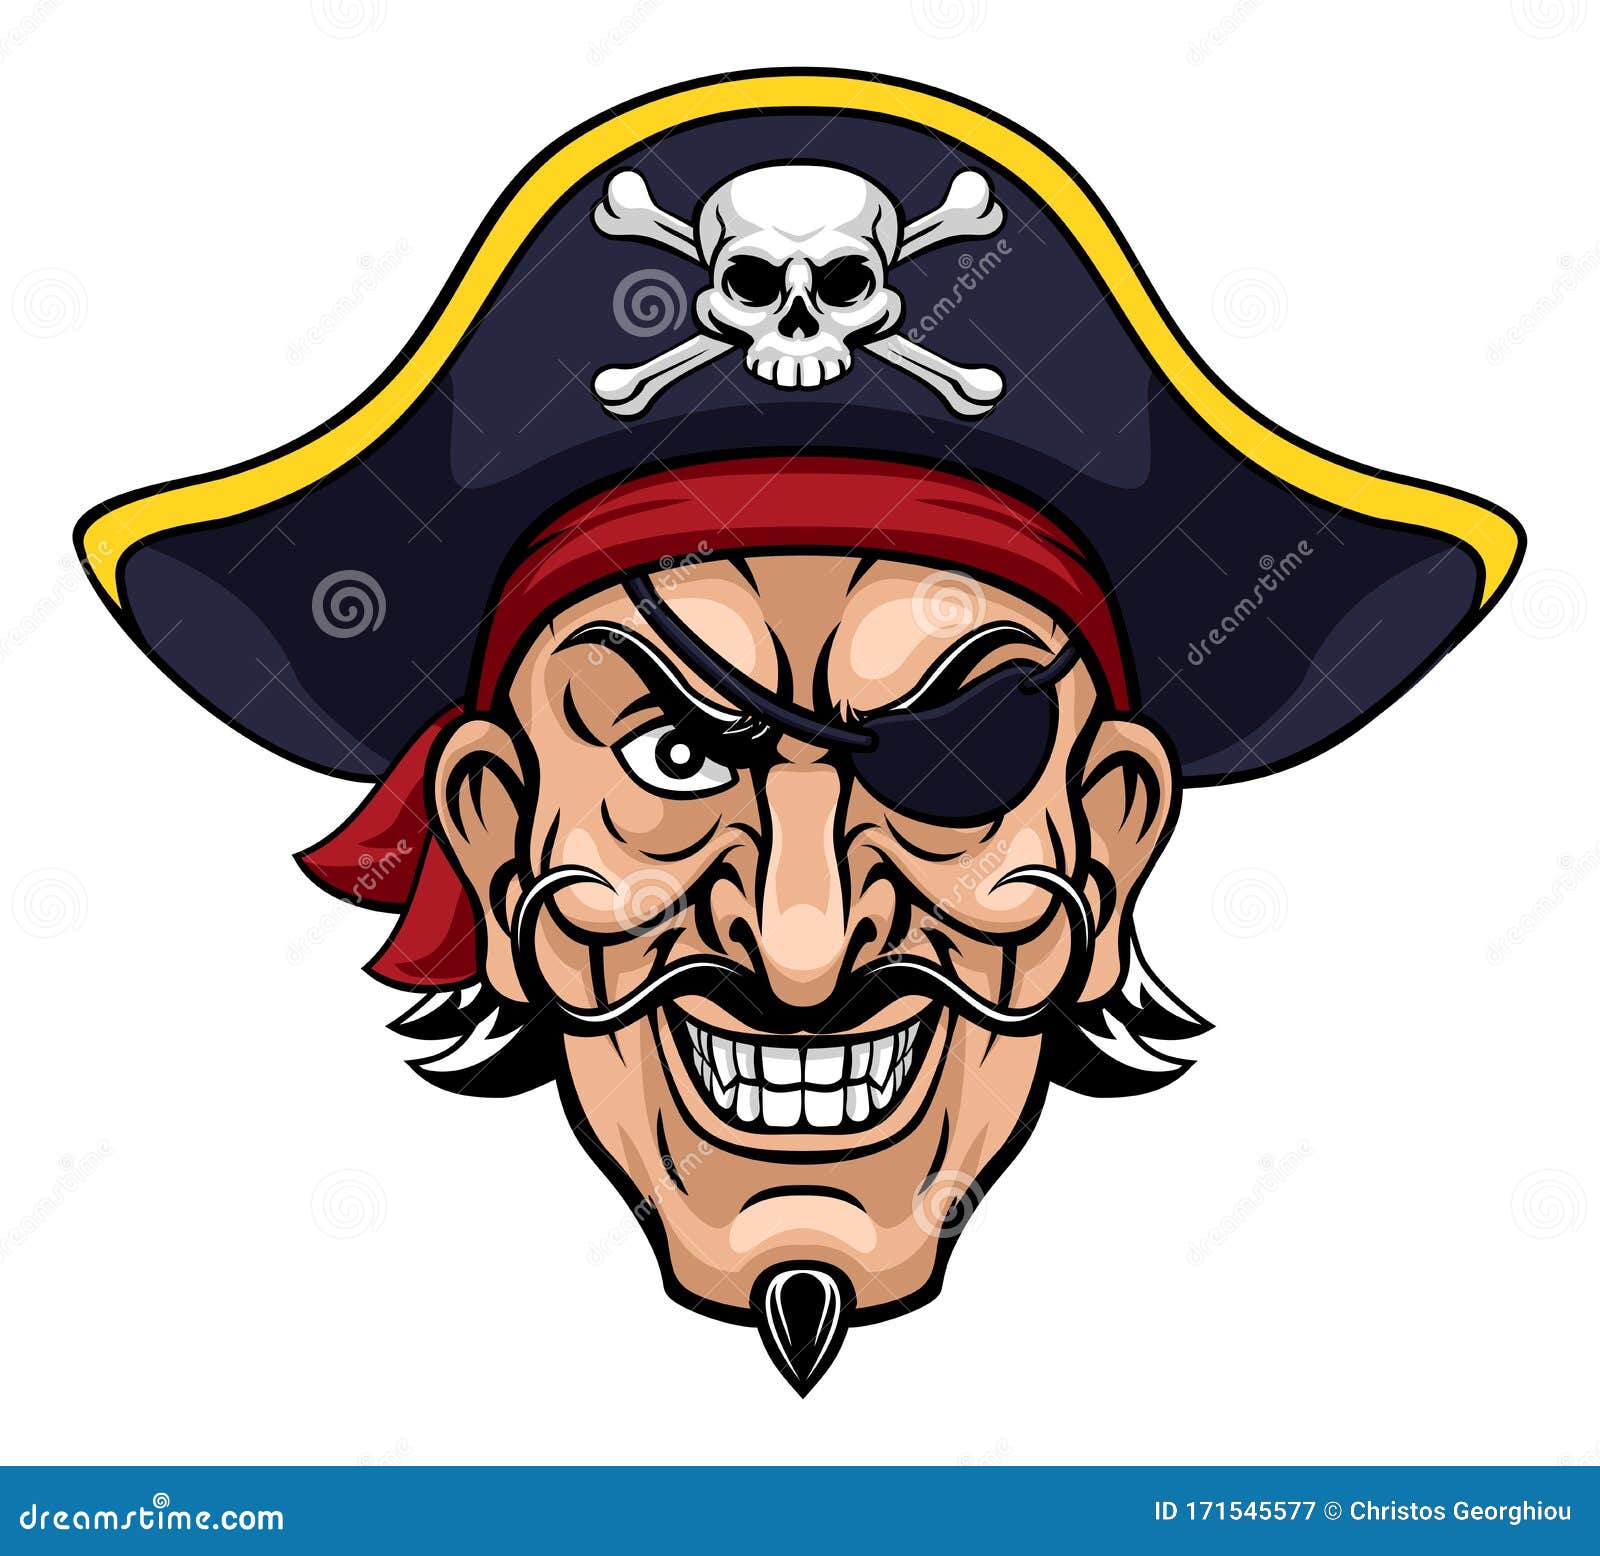 pirate-cartoon-character-captain-mascot-face-skull-crossed-bones-his-tricorne-hat-pirate-captain-cartoon-character-171545577.jpg